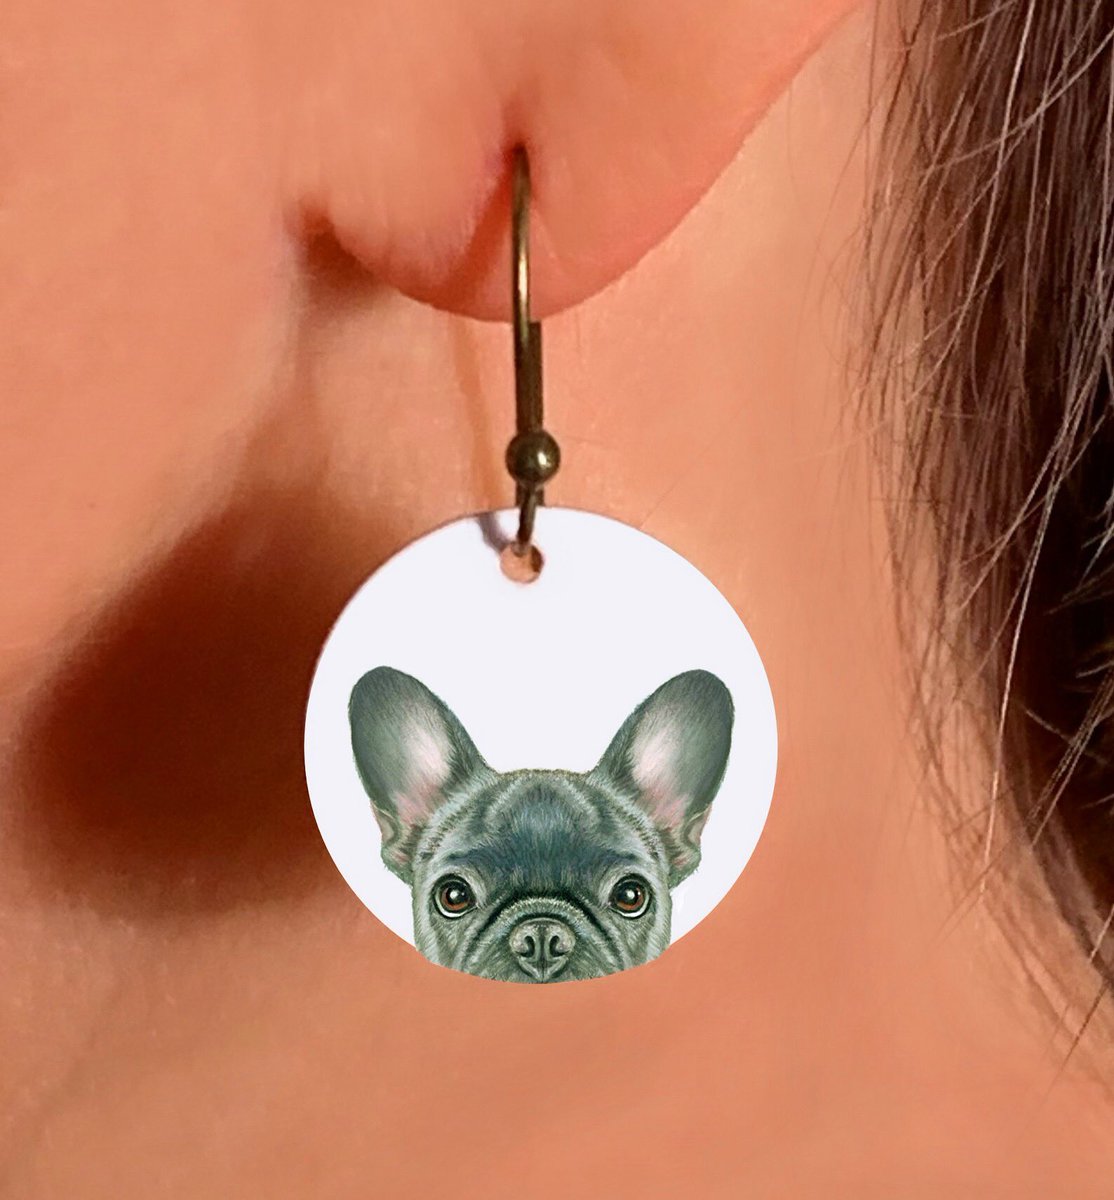 New! Gray Frenchie Earrings artbyjulene.etsy.com/listing/171400… #frenchiefriday #grayfrenchbulldog #bluefrenchbulldog #frenchbulldogs #frenchbullys #dogearrings #dogjewelry